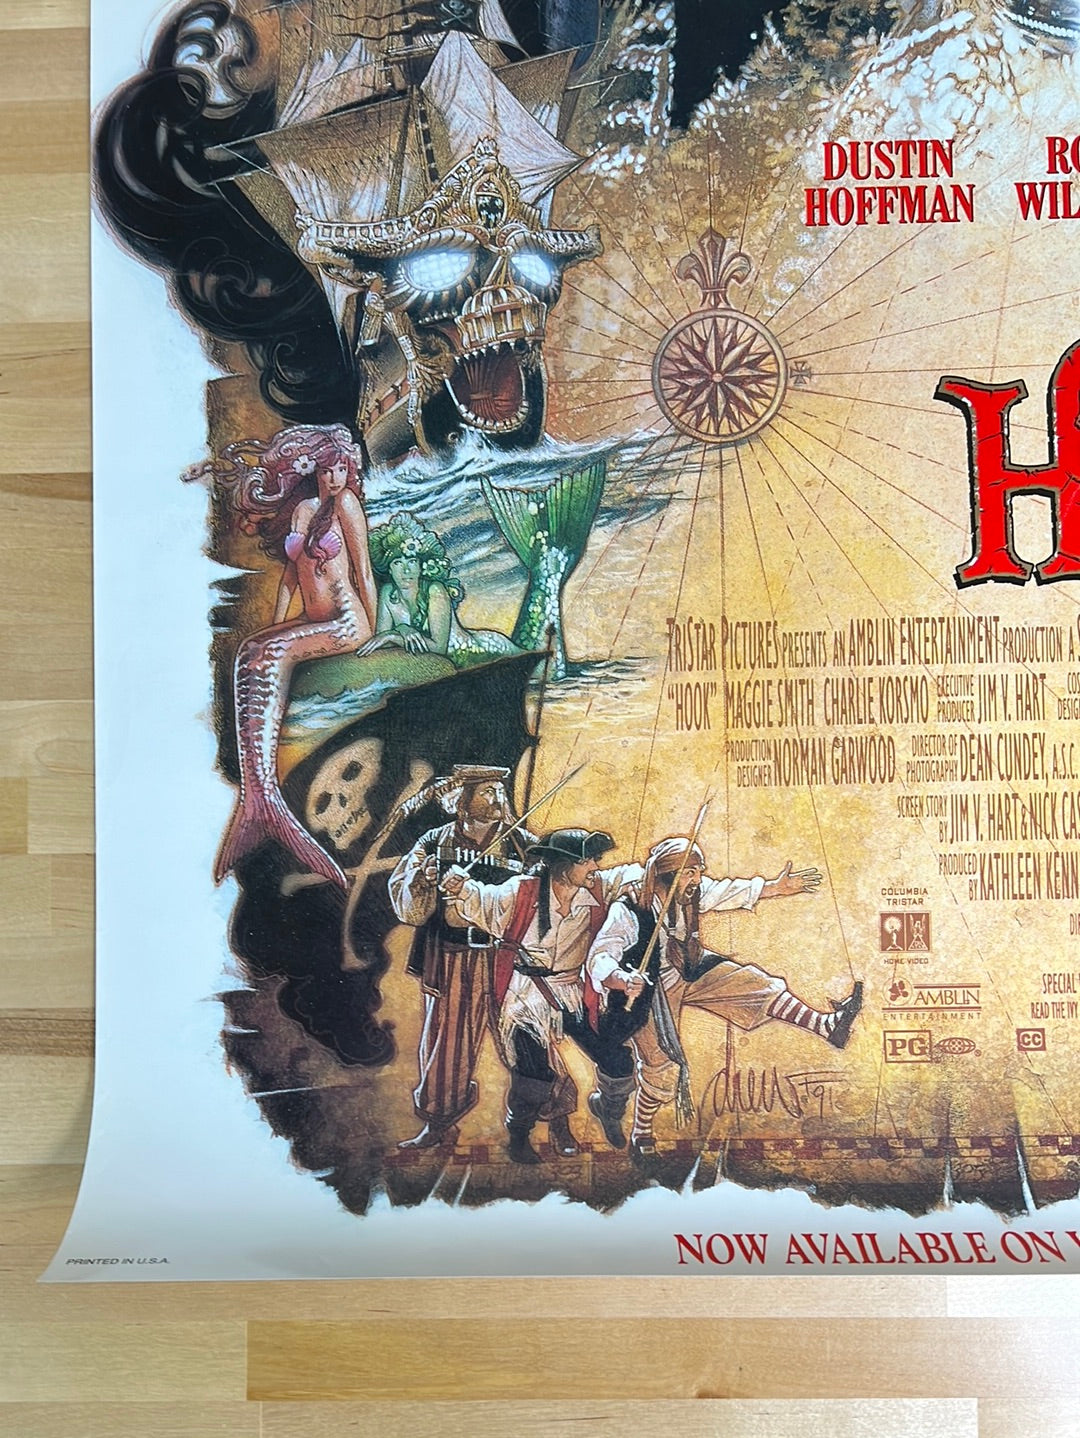 hook 1991 poster